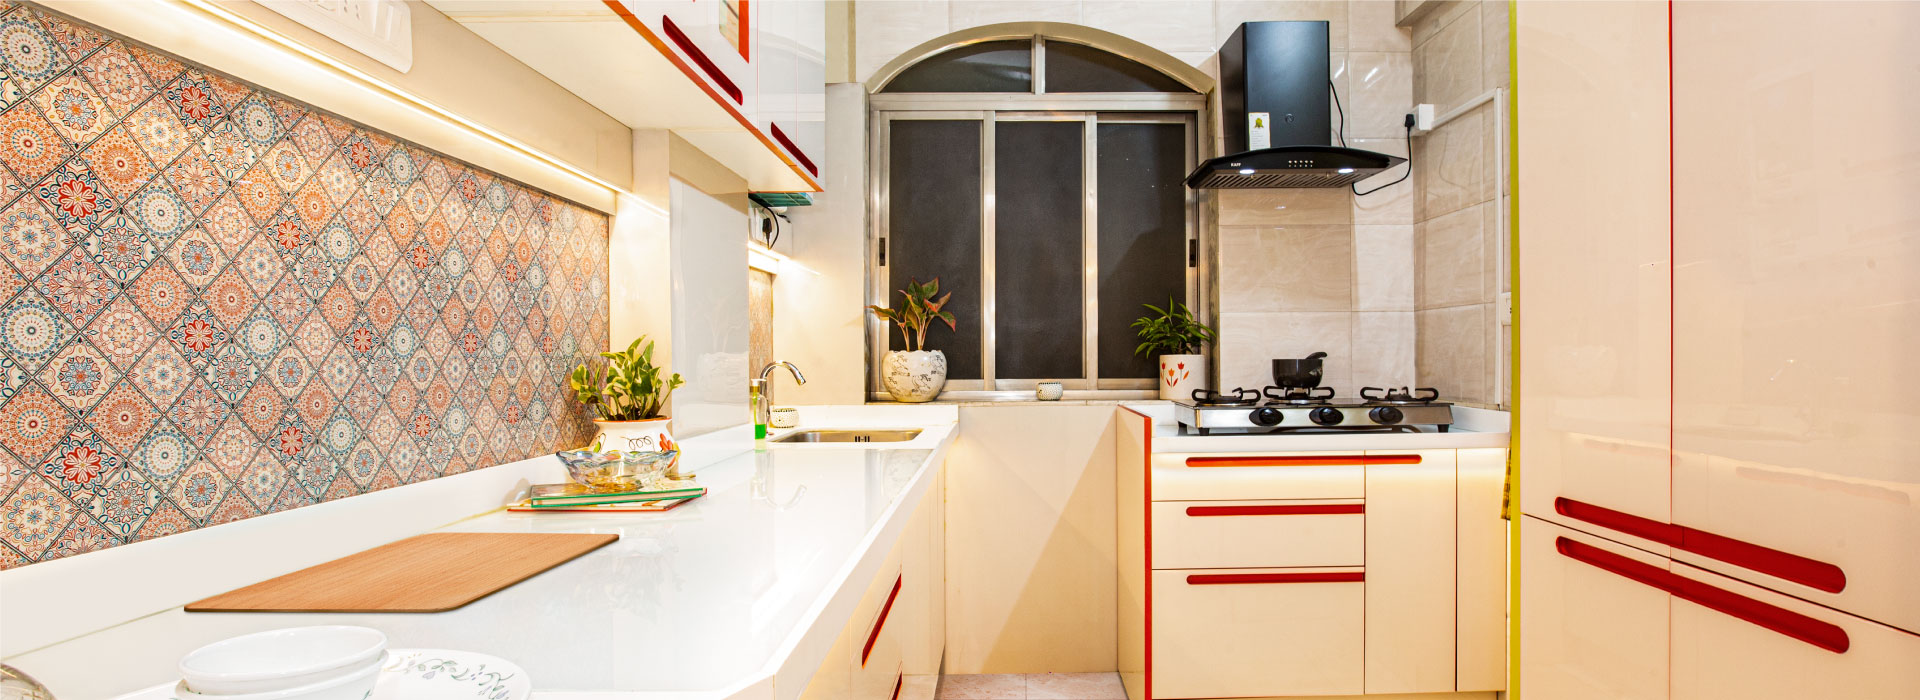 Modular Kitchen Red White | Promkraft Interior